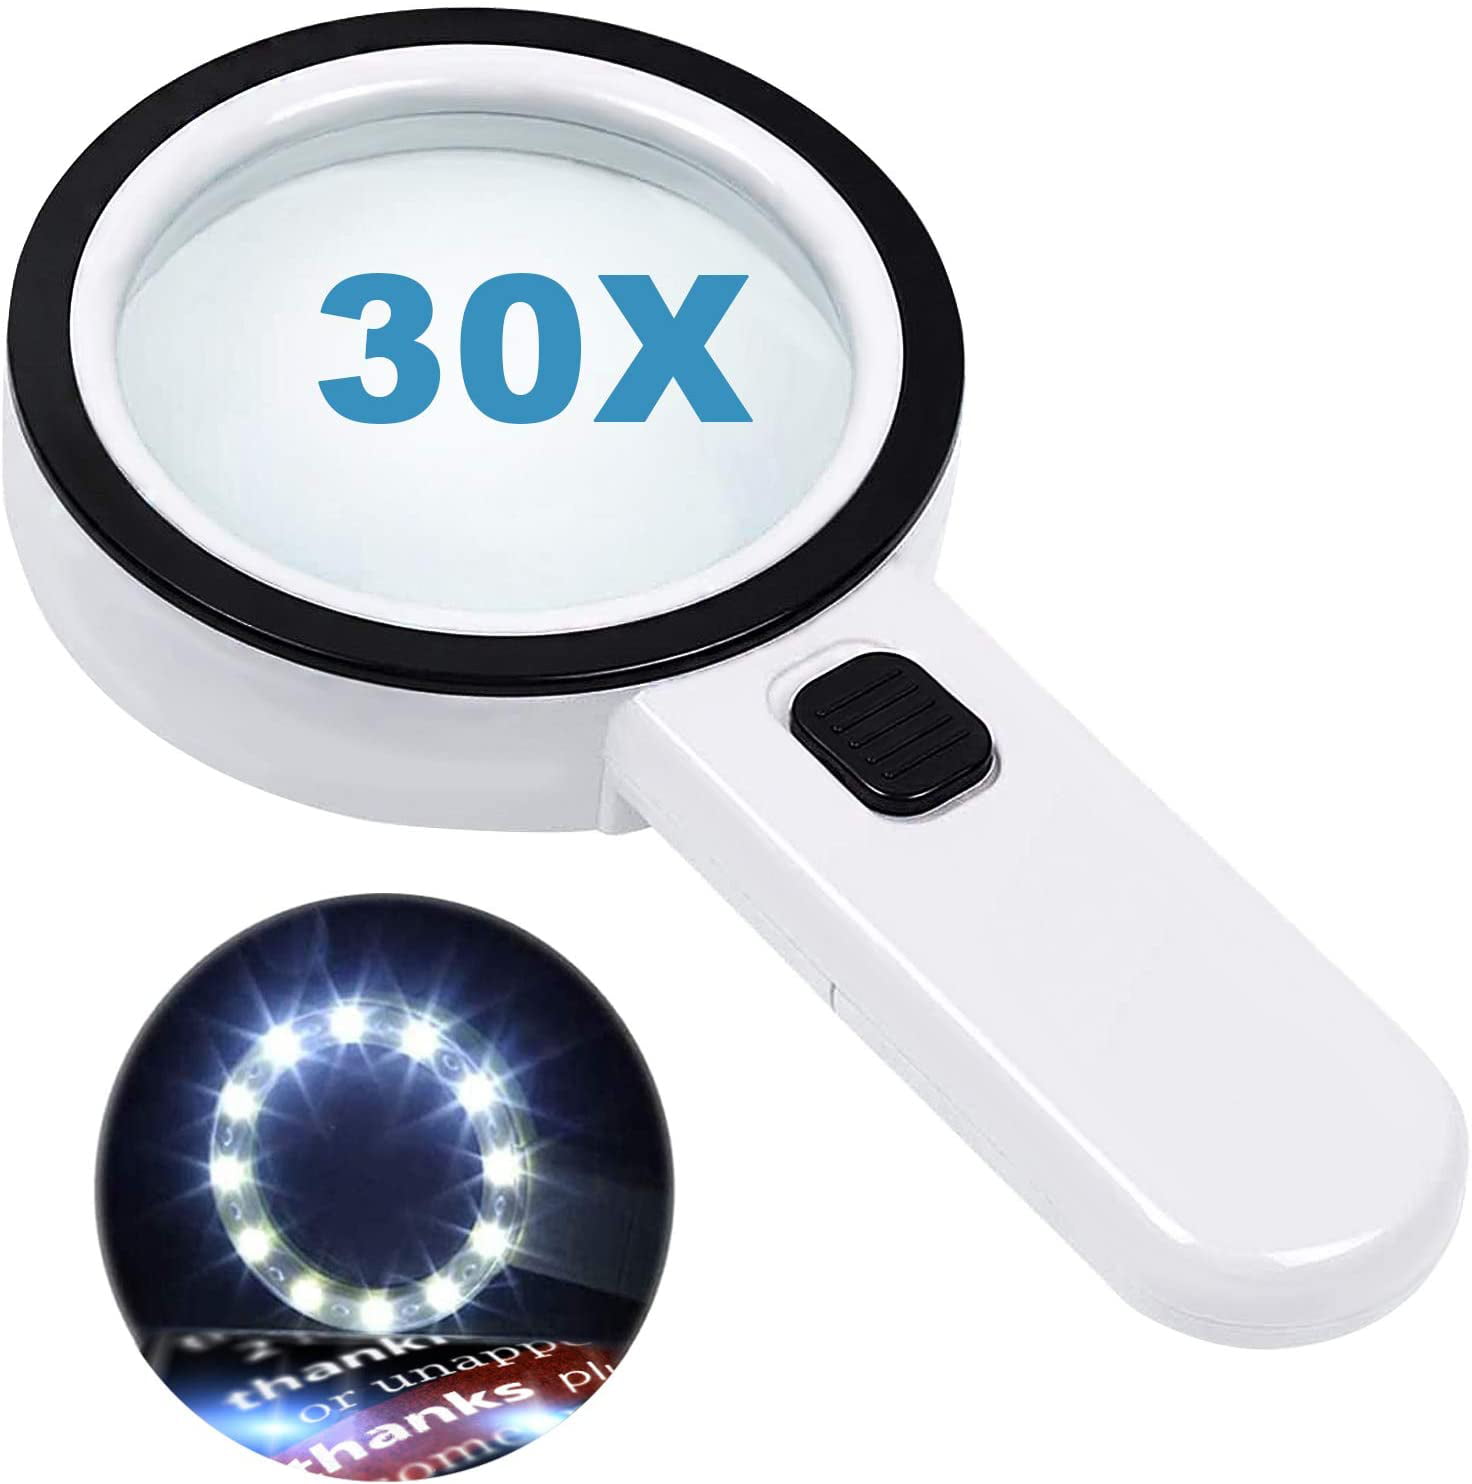 Multi-Scene Use Portable Magnifying Glass 75mm Large Caliber Reading Newspaper Handheld Magnifying Glass Magnifier for Reading